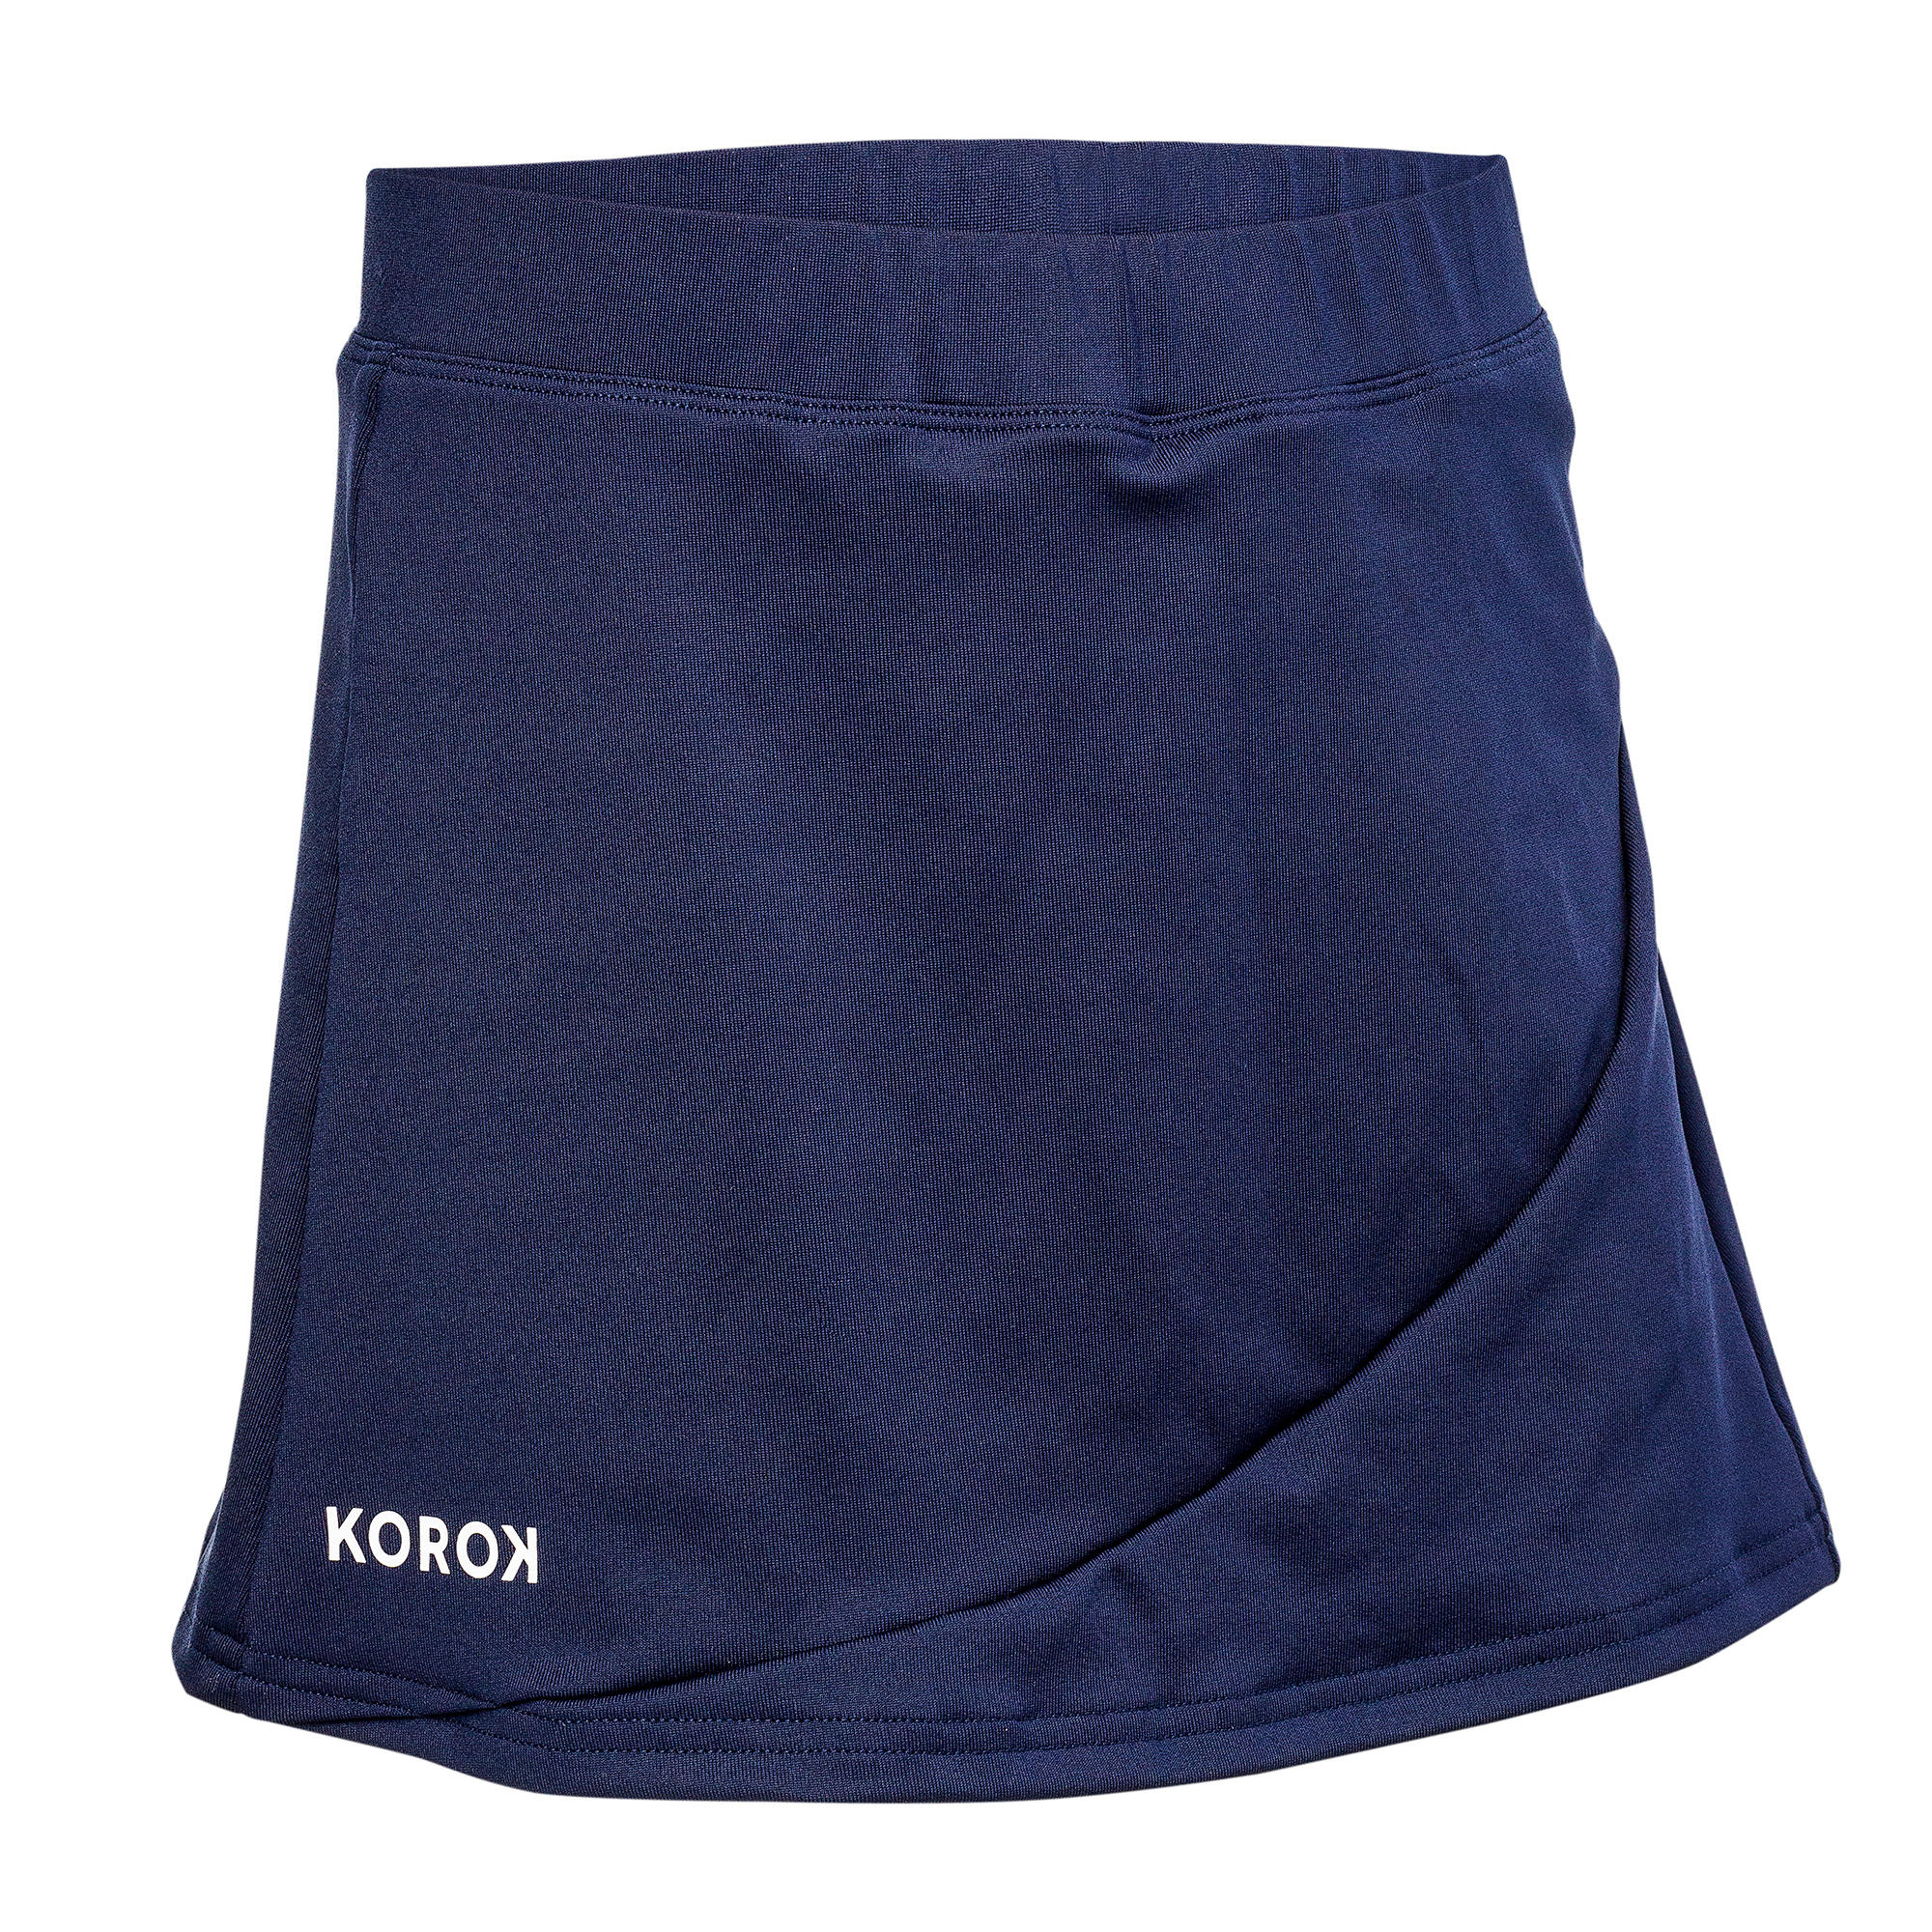 KOROK Girls' Field Hockey Skirt FH500 - Navy Blue